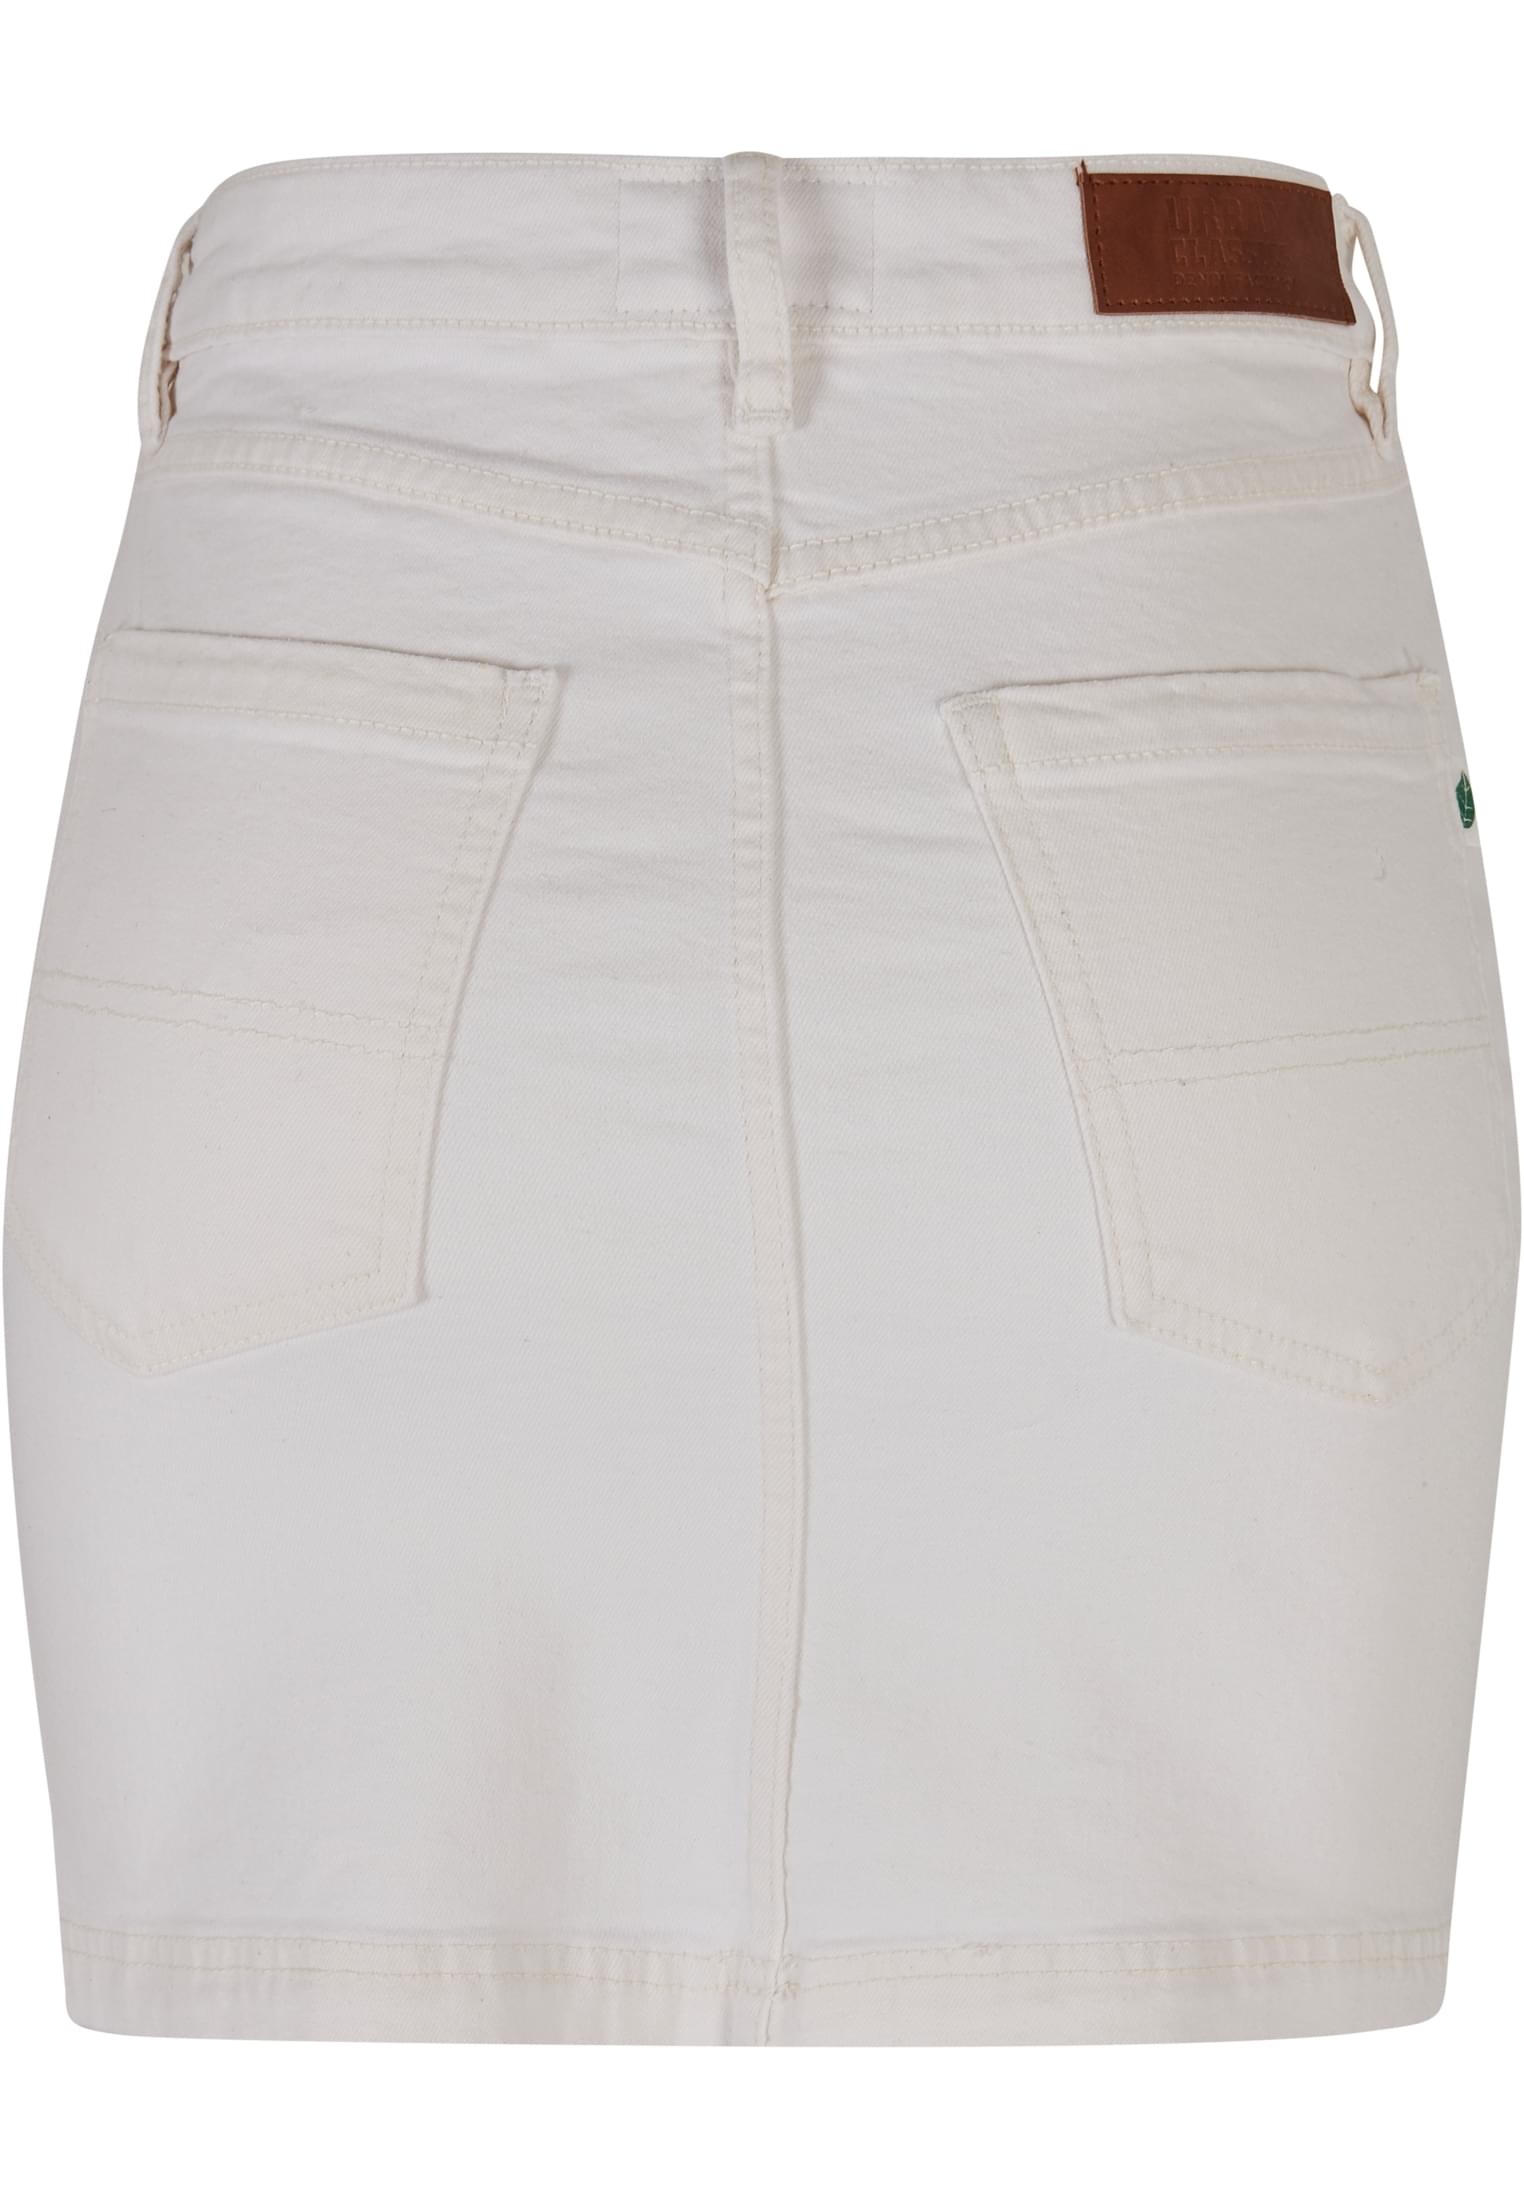 Frauen Ladies Organic Stretch Denim Mini Skirt in Farbe offwhite raw